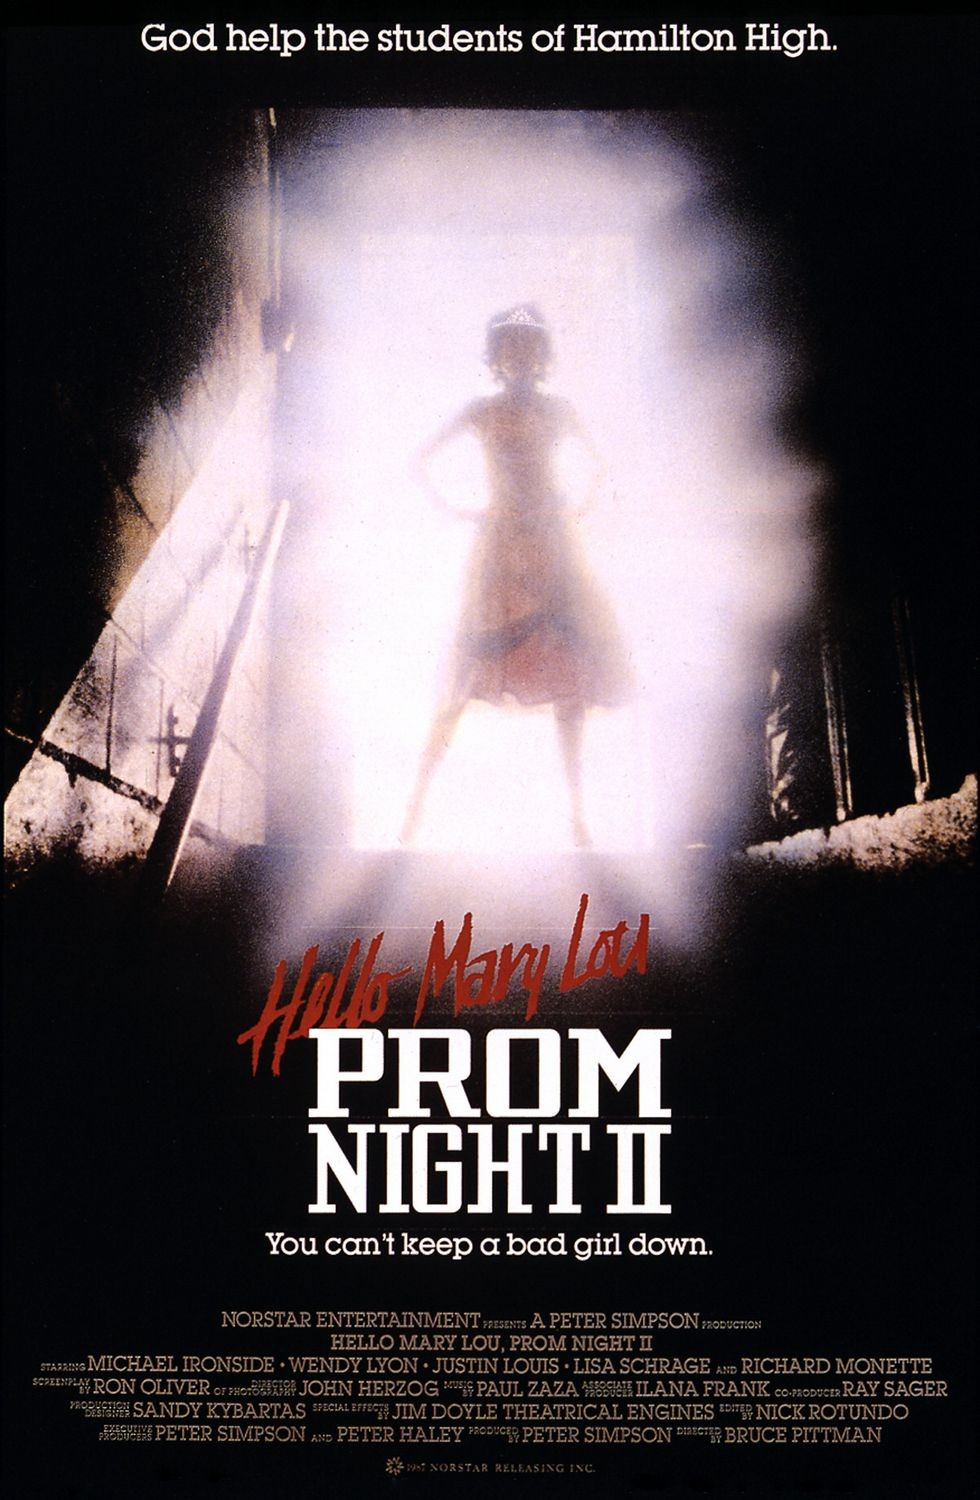 Hello Mary Lou: Prom Night II 147241